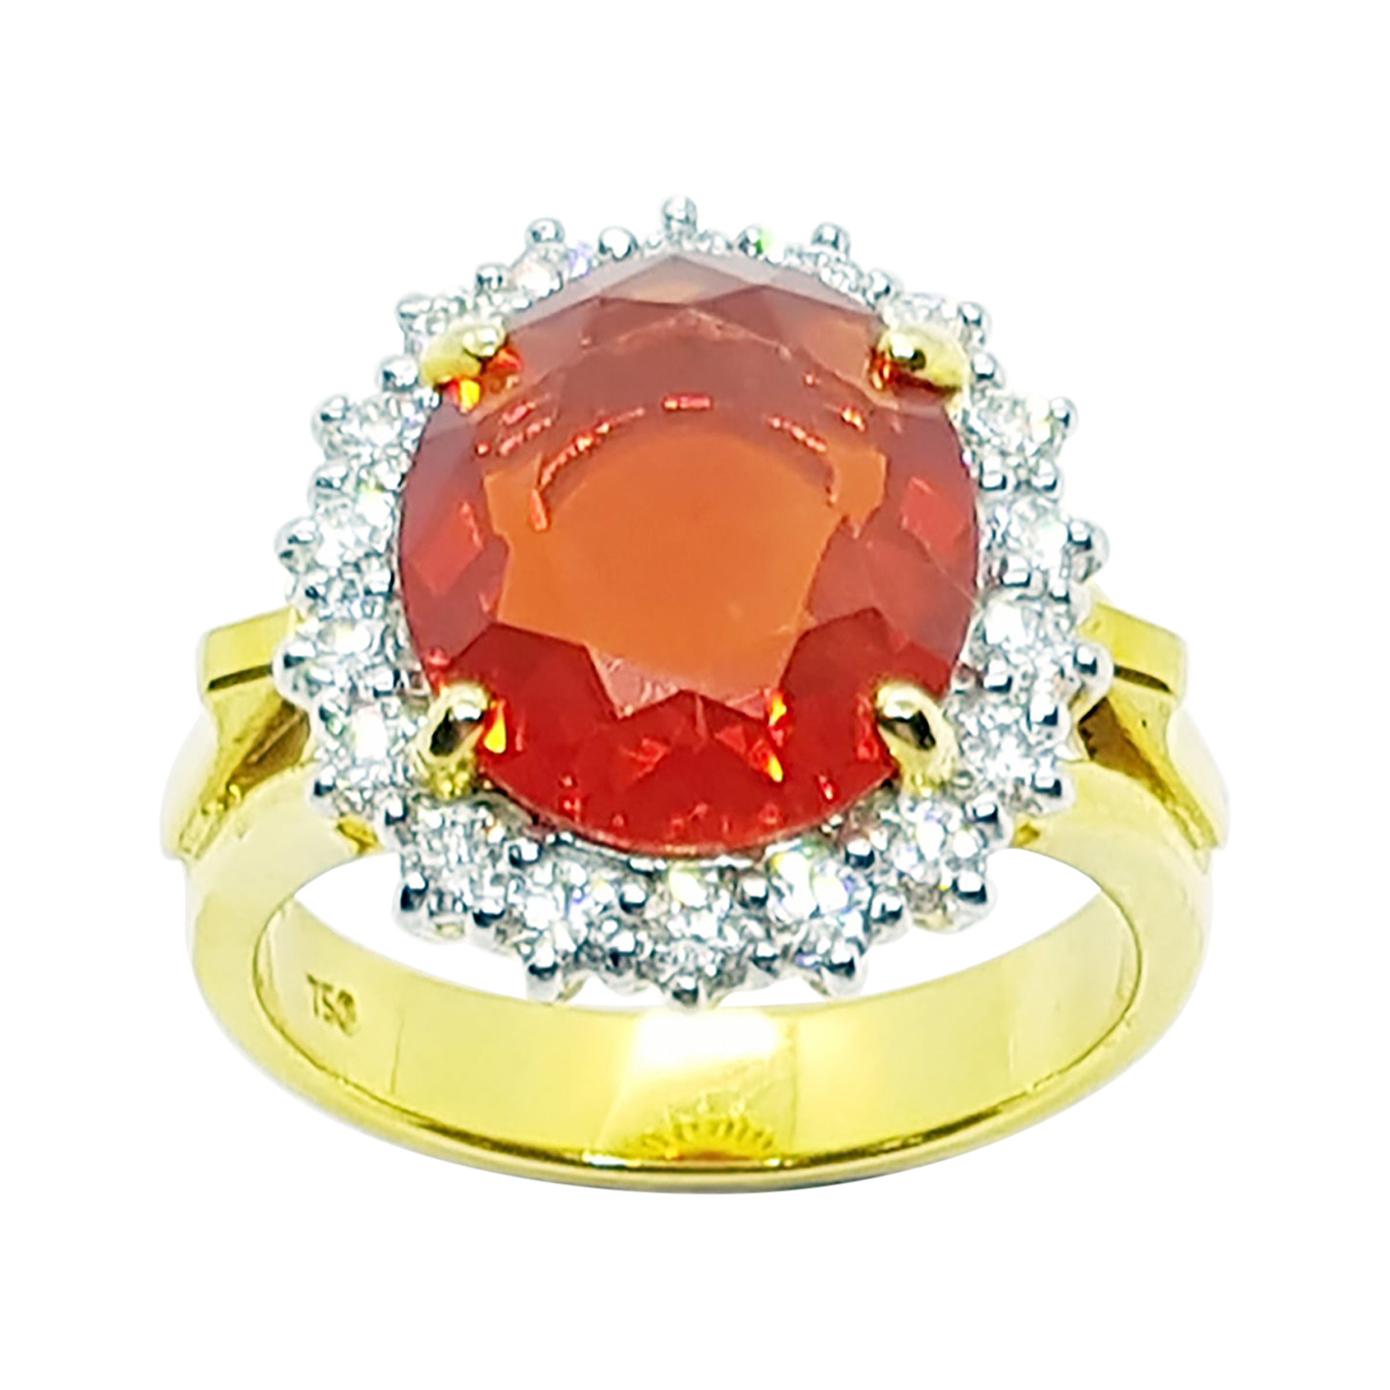 Fire Opal with Diamond Ring Set in 18 Karat Gold Settings